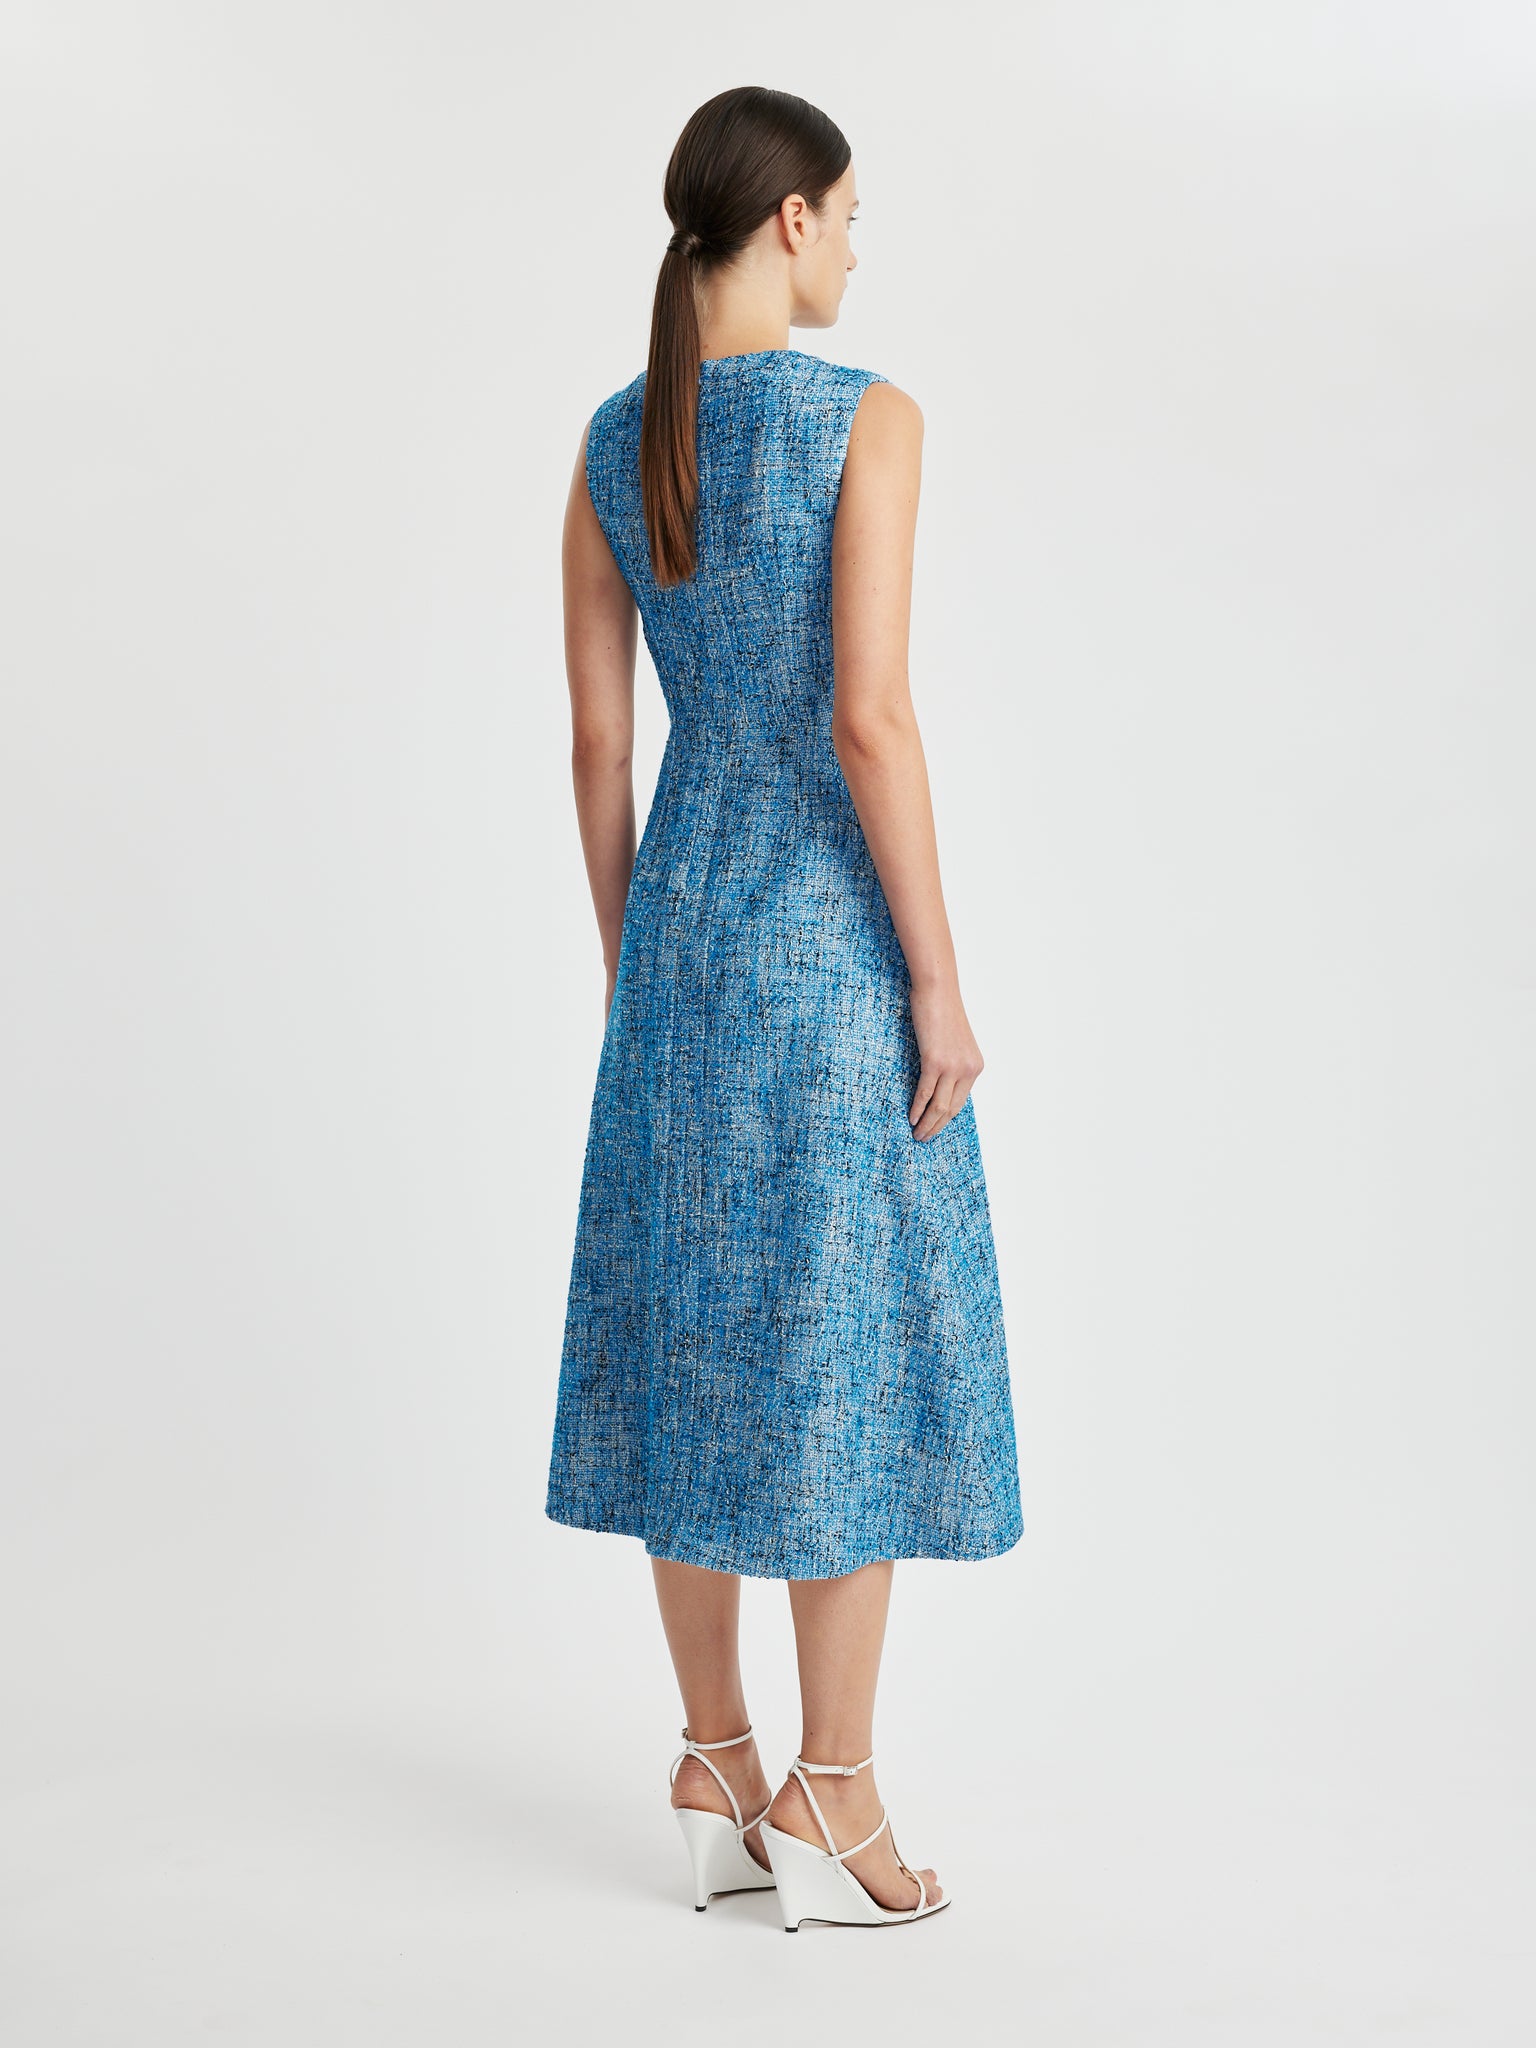 Mio Dress In Blue Cotton Tweed - Emilia Wickstead